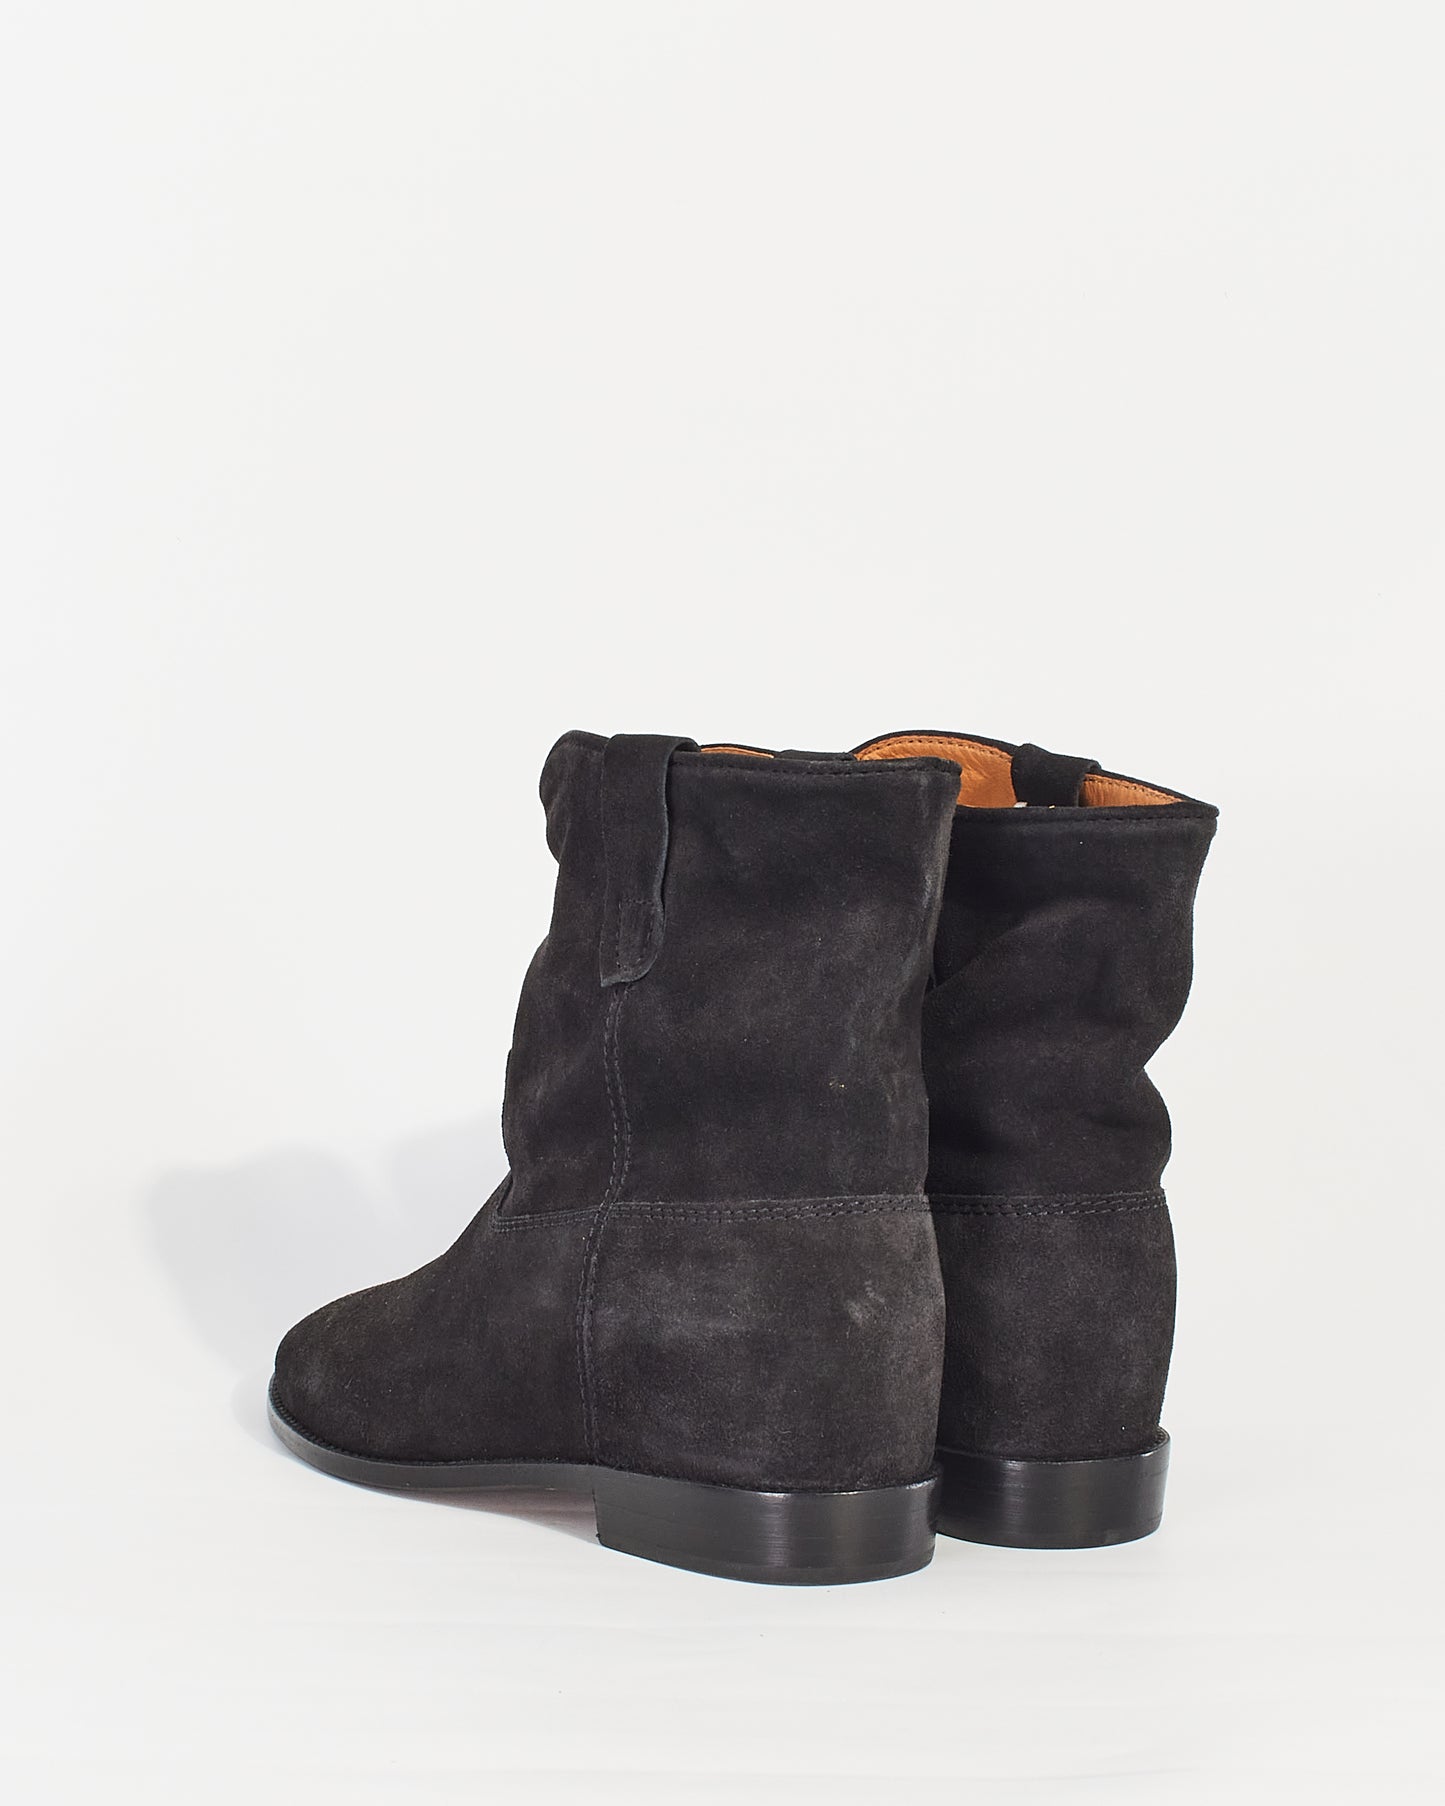 Isabel Marant Black Suede Crisi Boots - 40